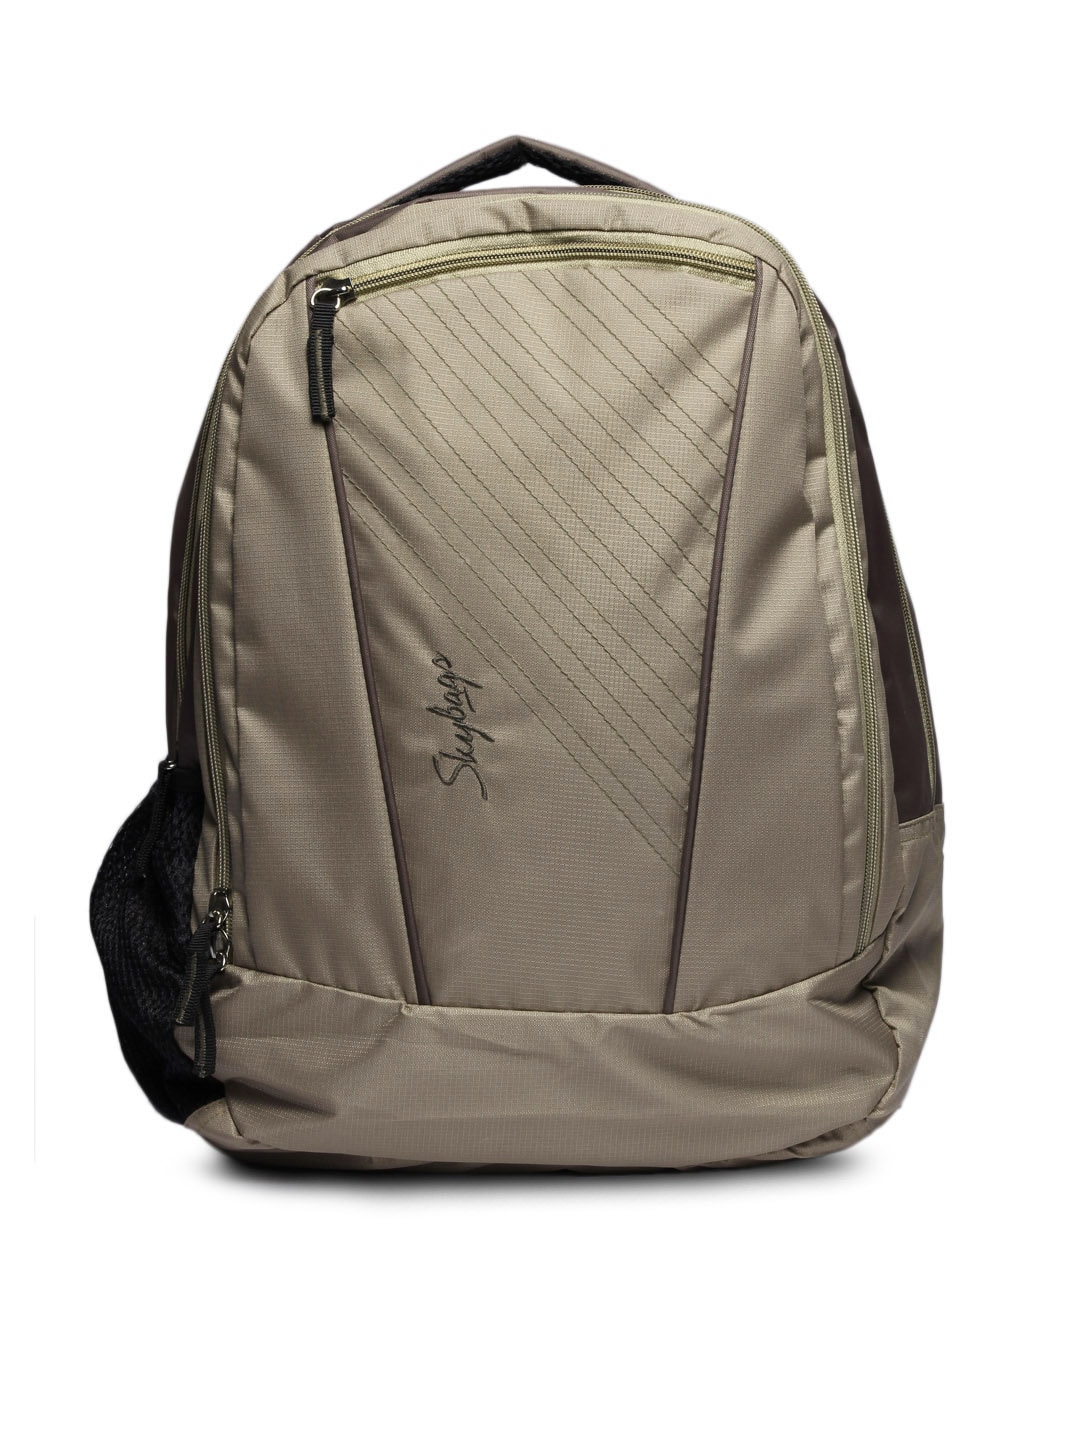 Skybags Unisex Brown Backpack